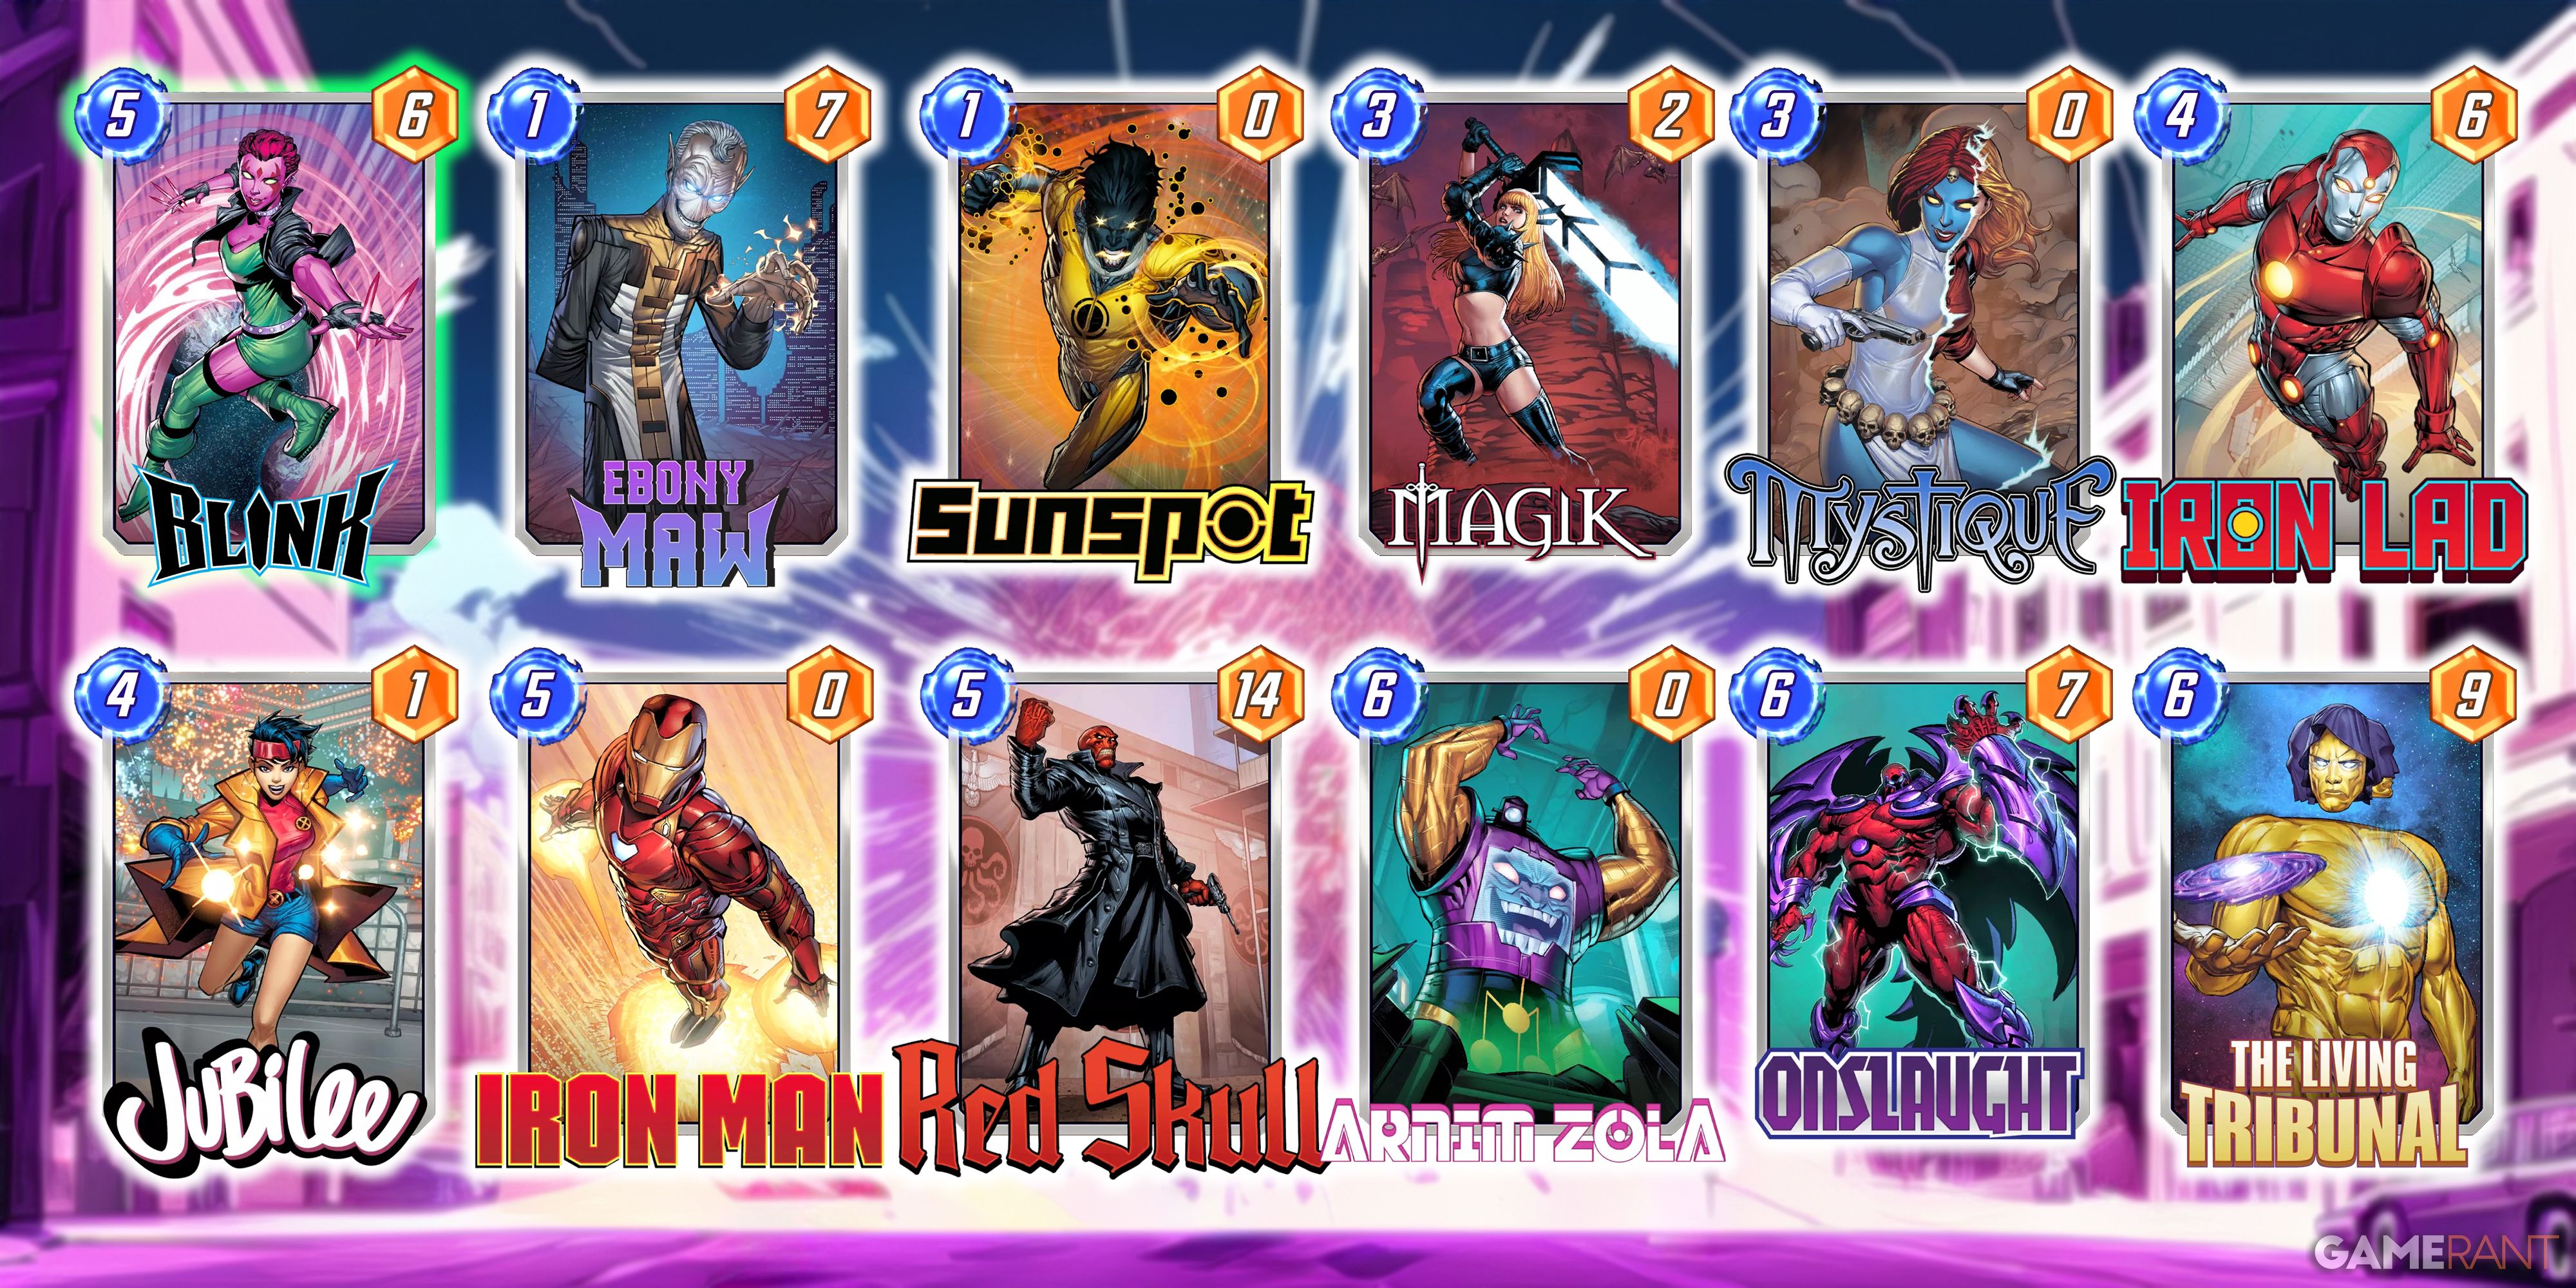 A Marvel Snap deck consisting of Blink, Ebony Maw, Sunspot, Magik, Mystique, Iron Lad, Jubilee, Iron Man, Red Skull, Arnim Zola, Onslaught, and The Living Tribunal.